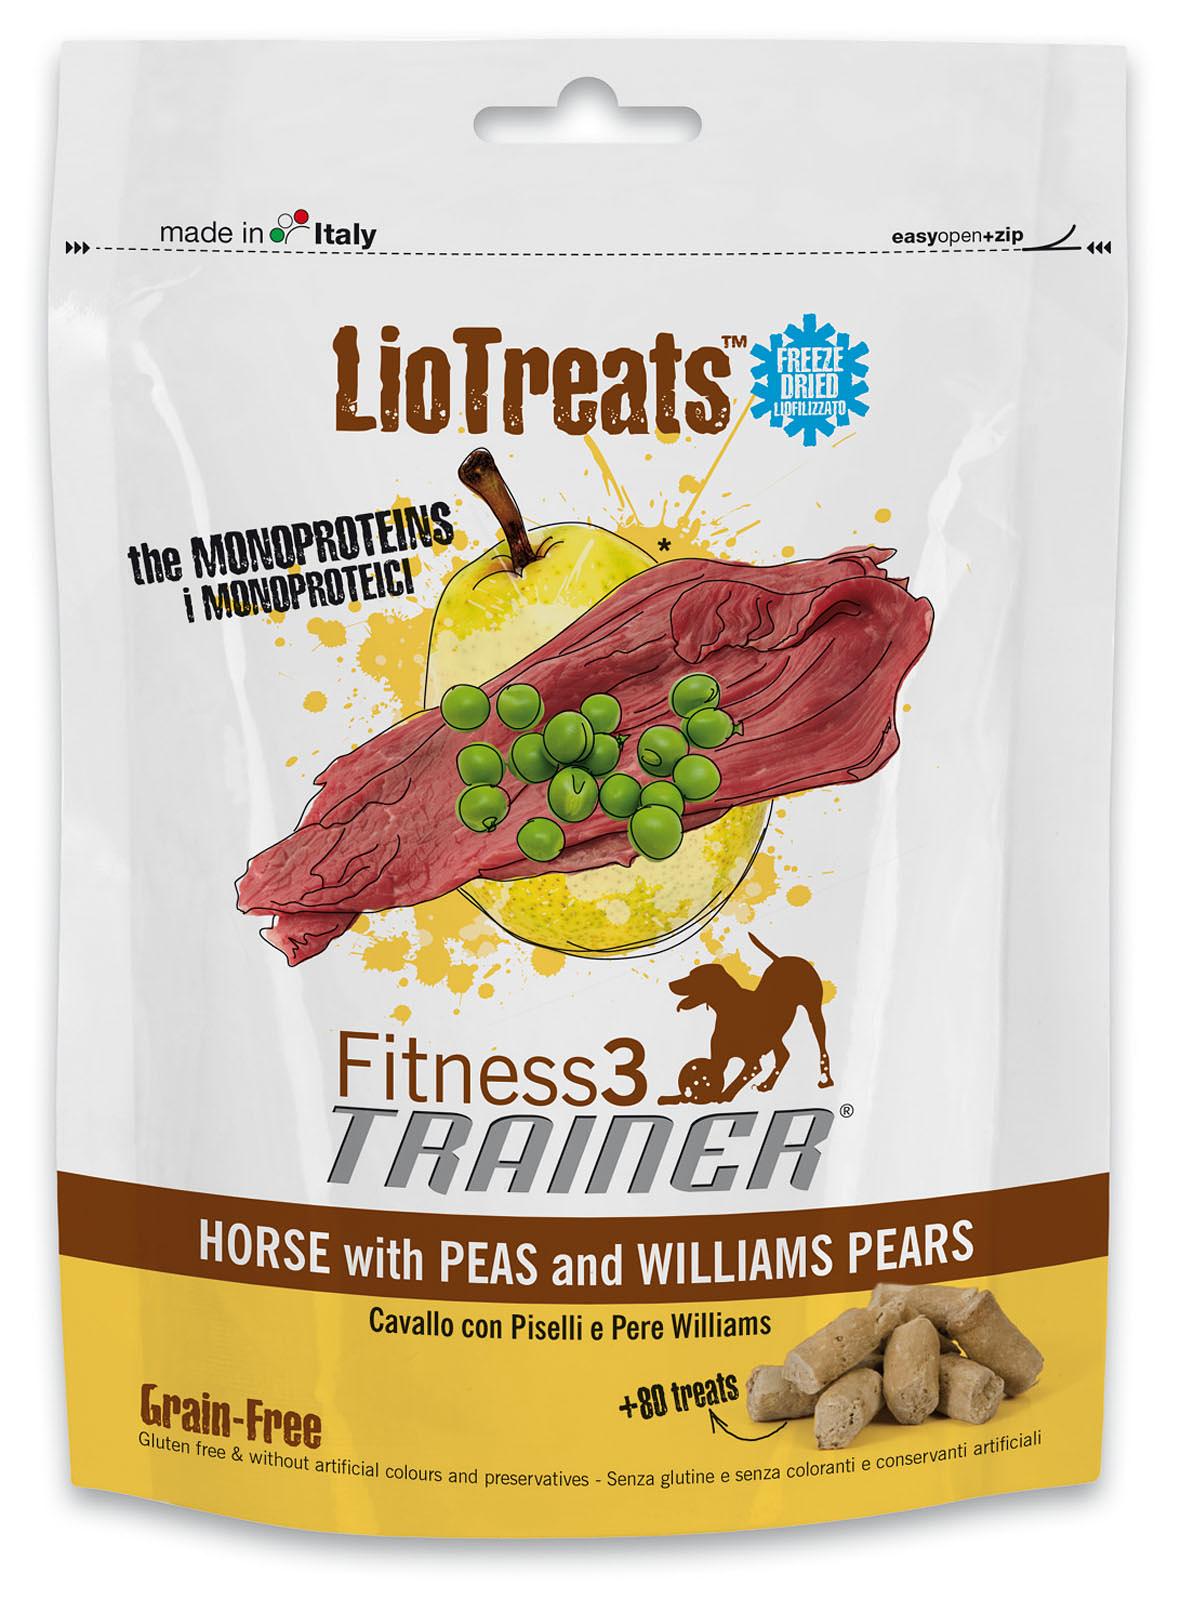 Trainer LioTreats, Fitness3, Horse, Peas & Pears